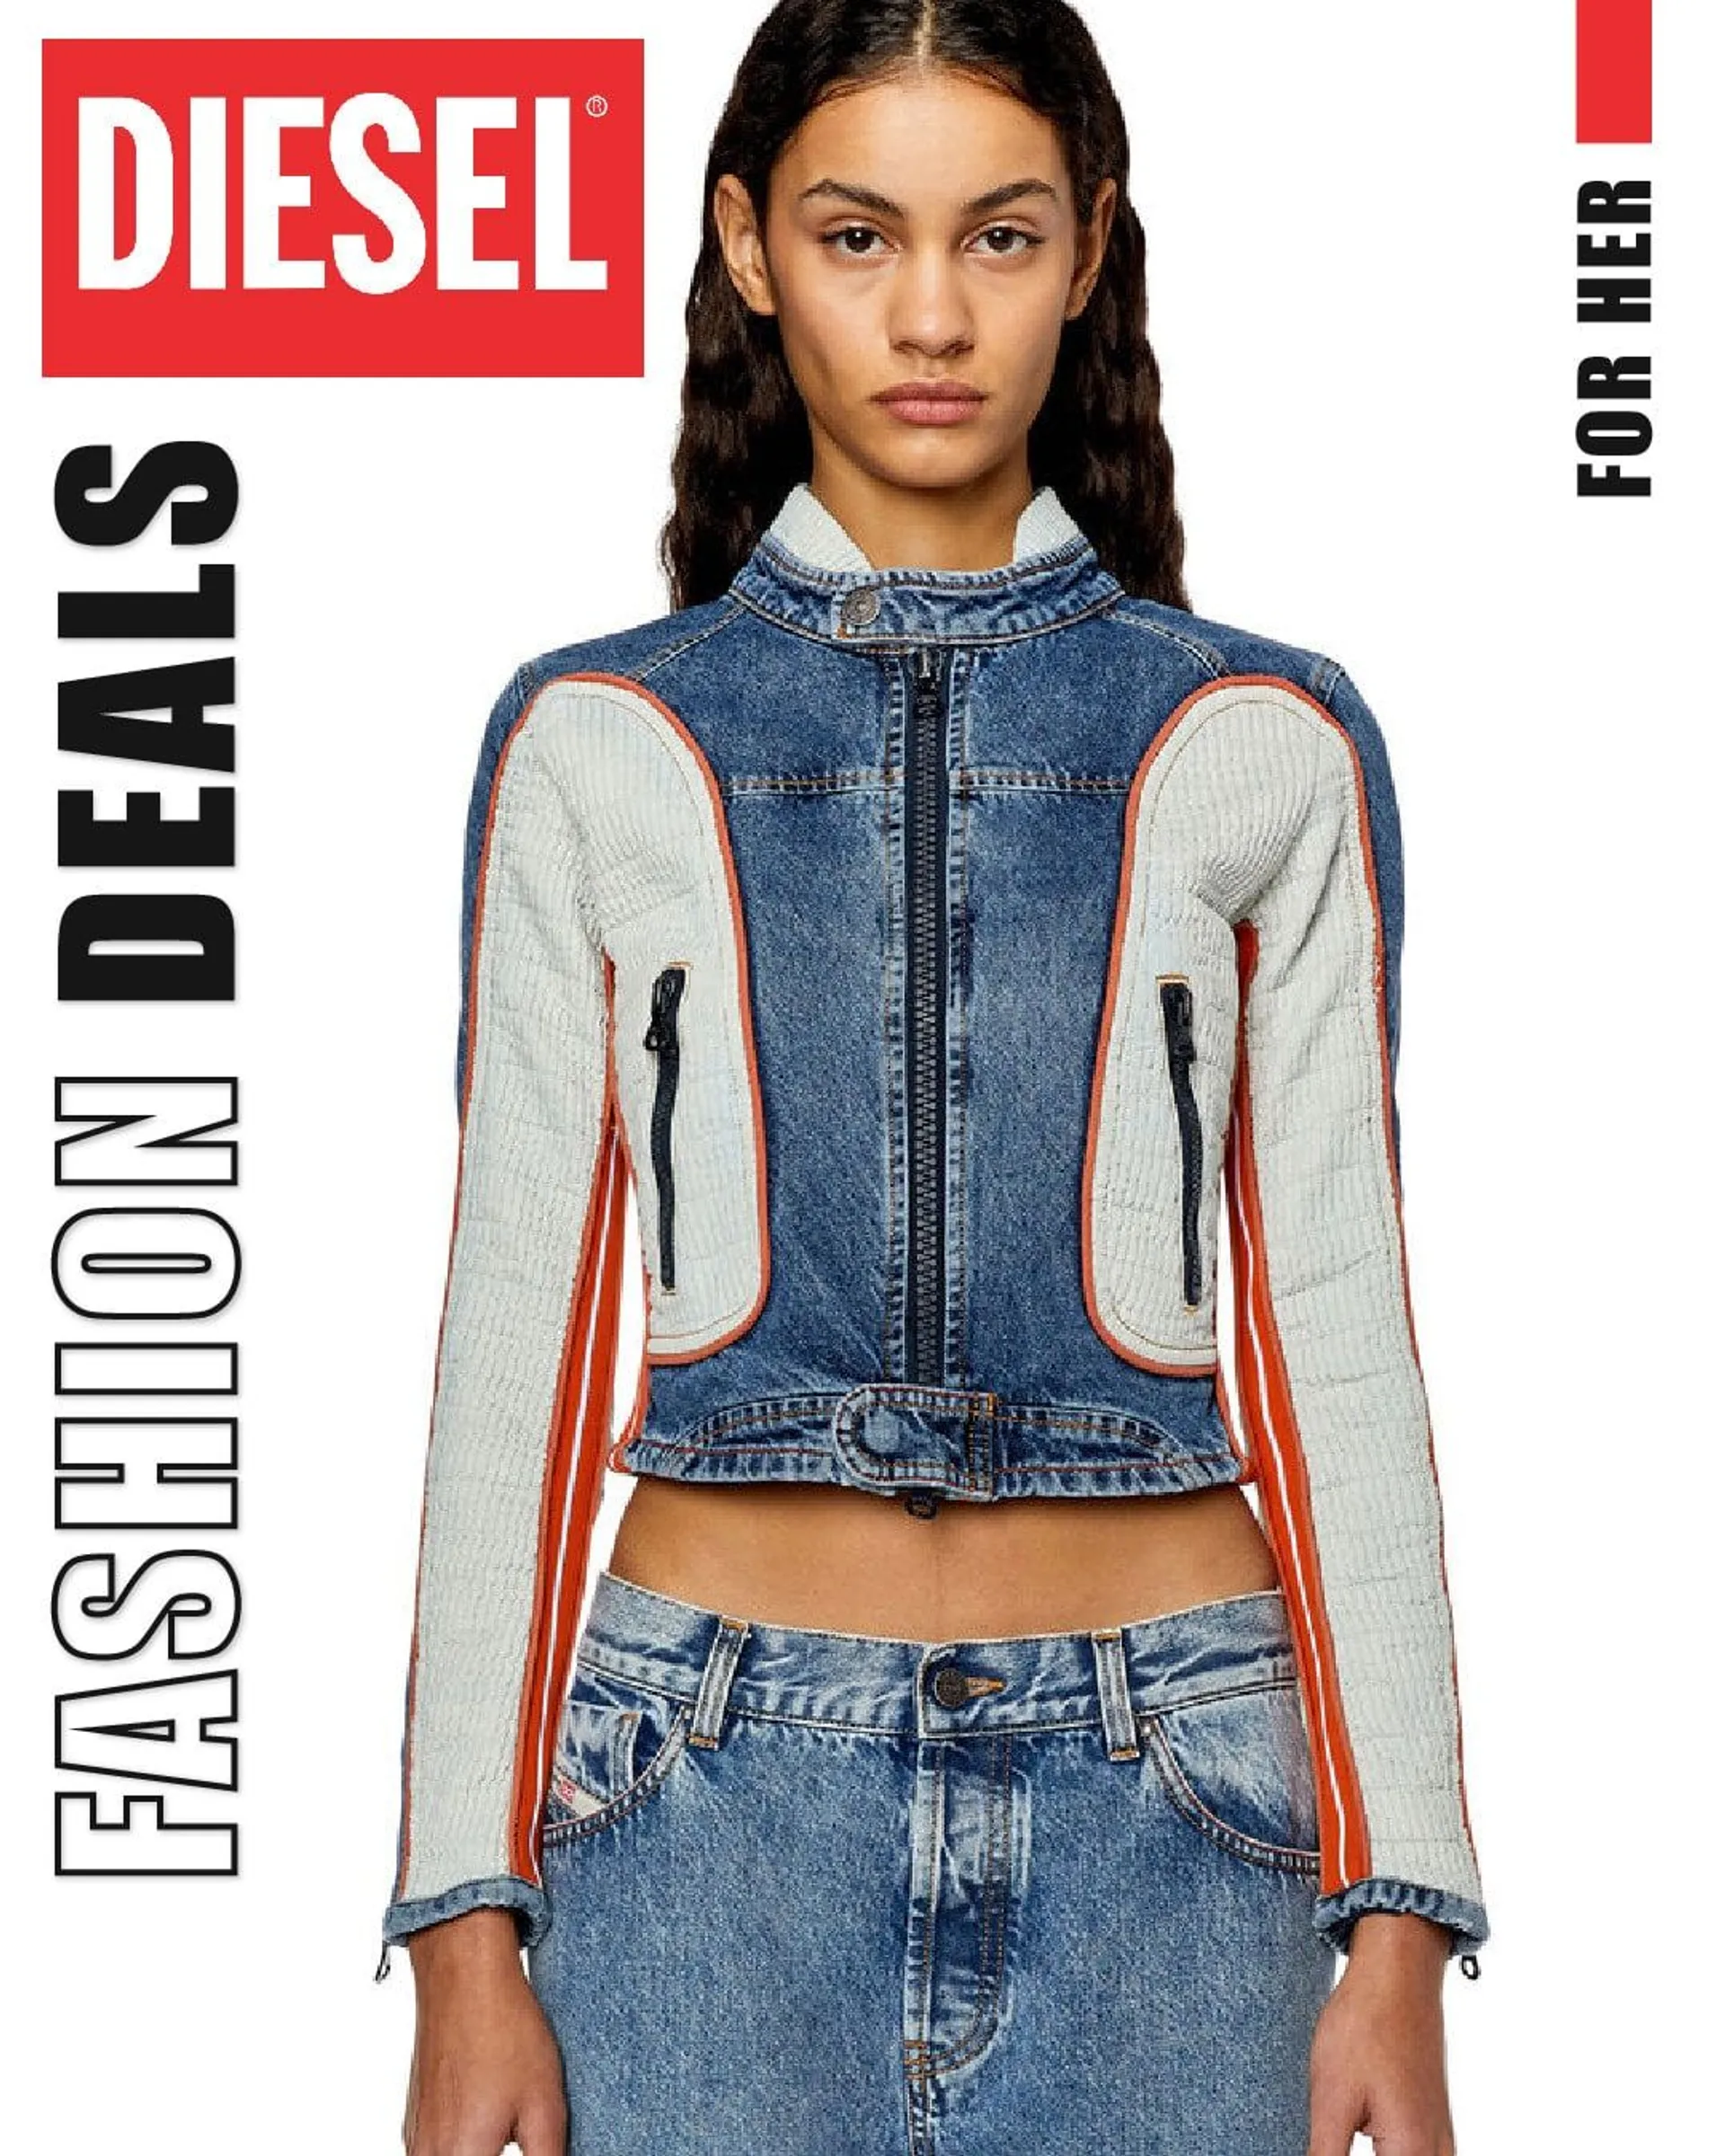 Diesel - Fashion Womens